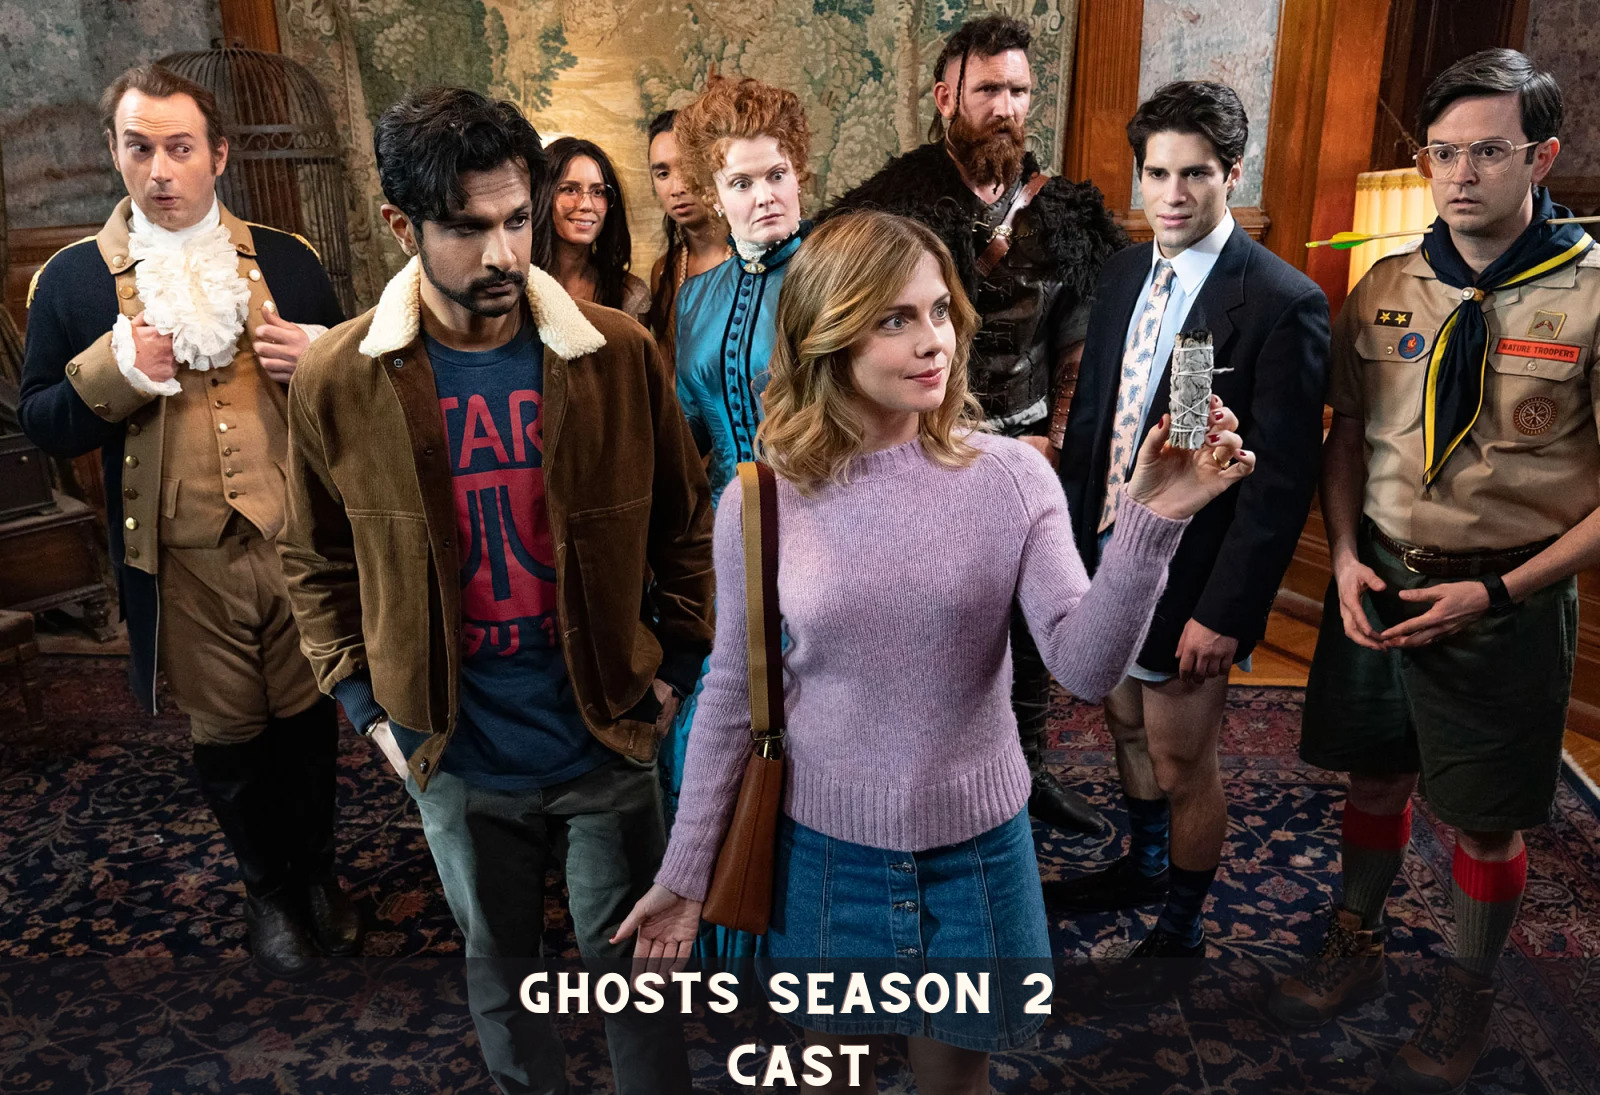 Ghosts Season 2 Cast